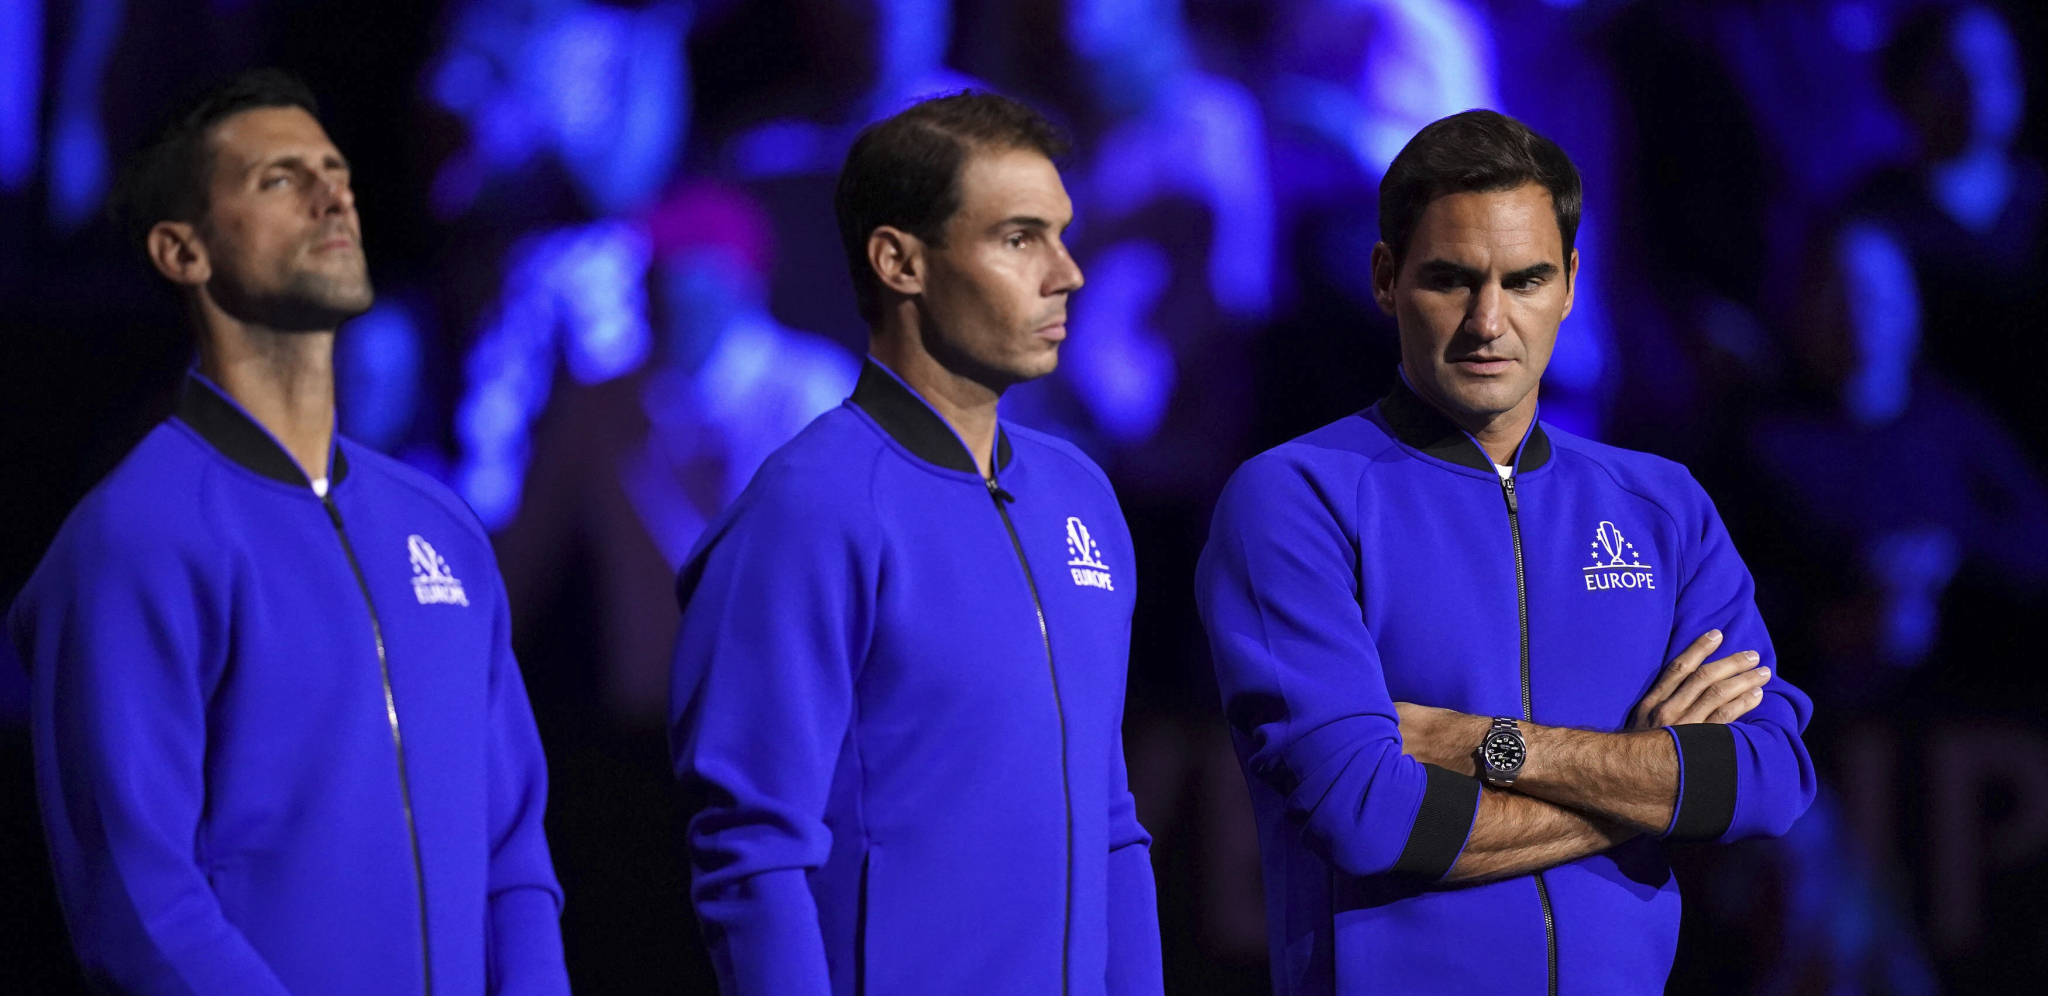 NOVAK JE NAJVEĆI, ALI... Kontroverzni teniser surovo iskren: Đoković je sa Federerom i Nadalom monopolizovao Tur